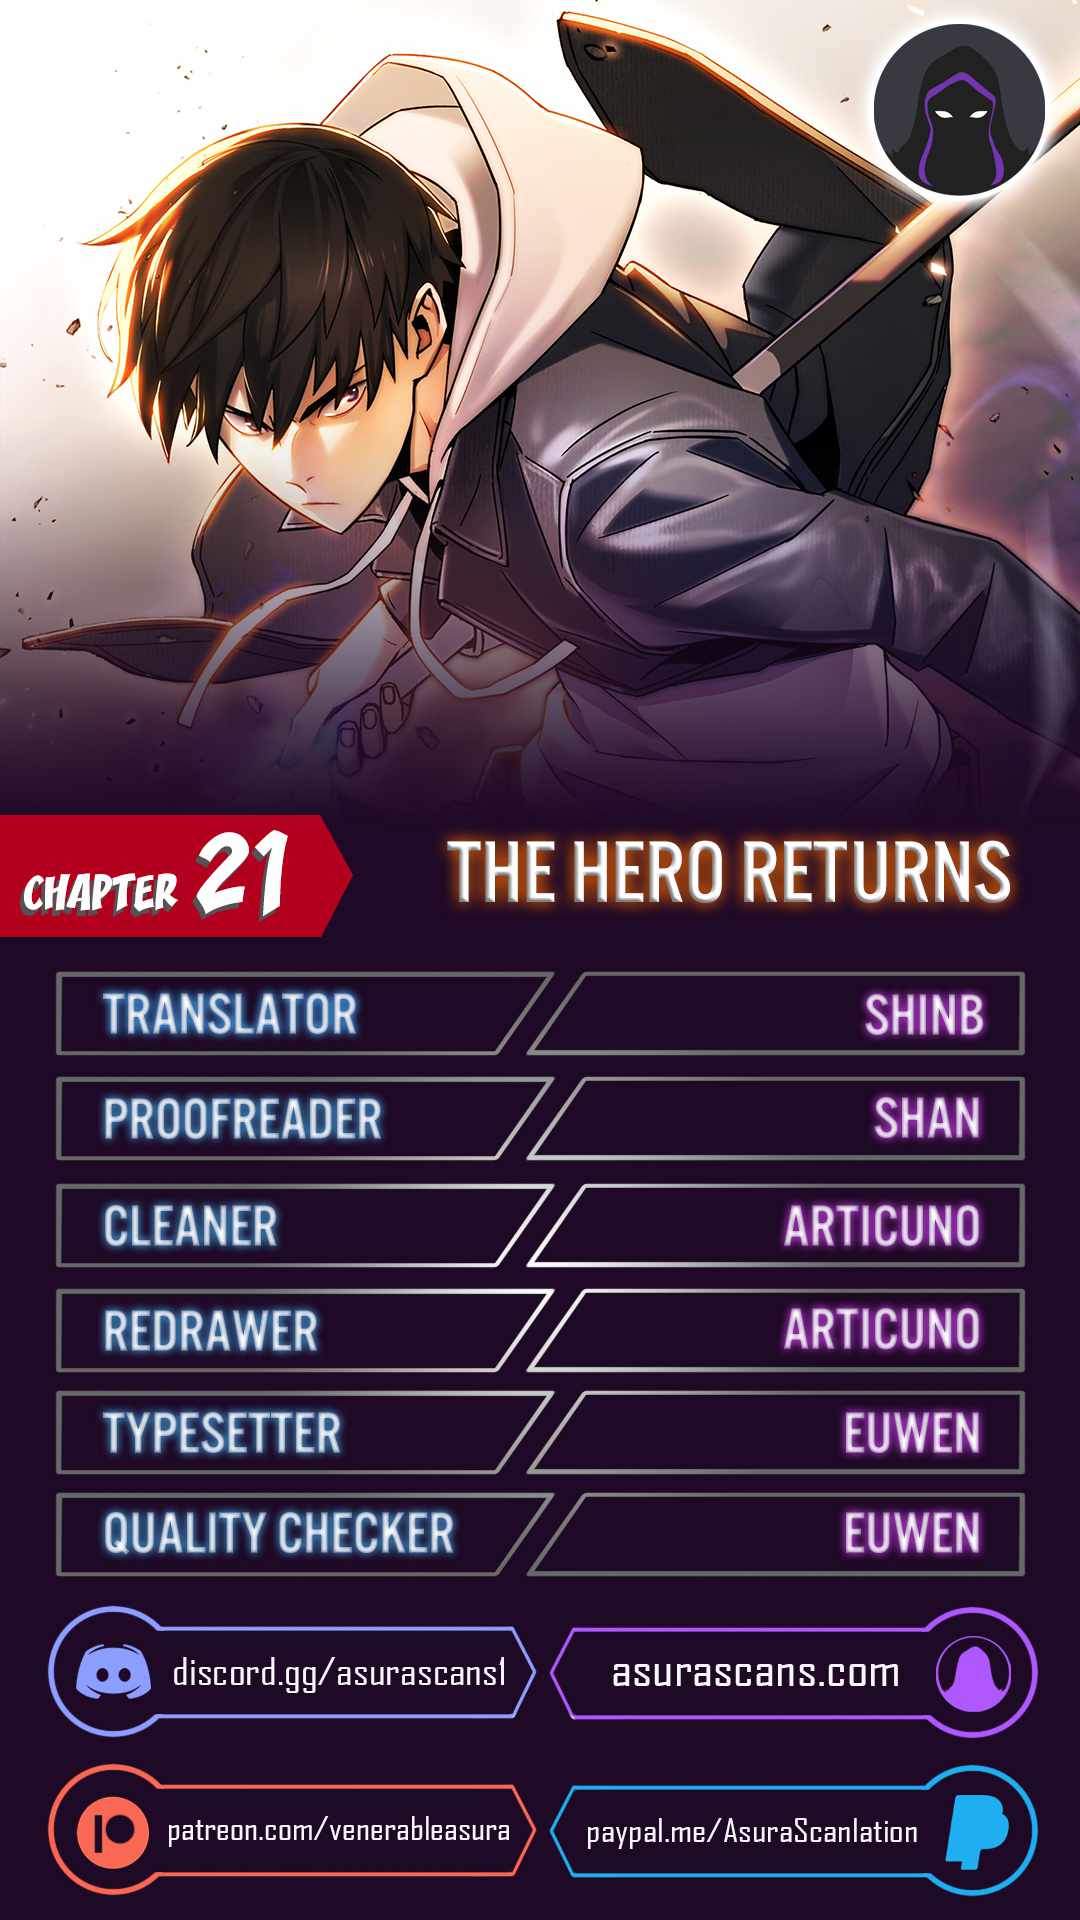 The Hero Returns chapter 21